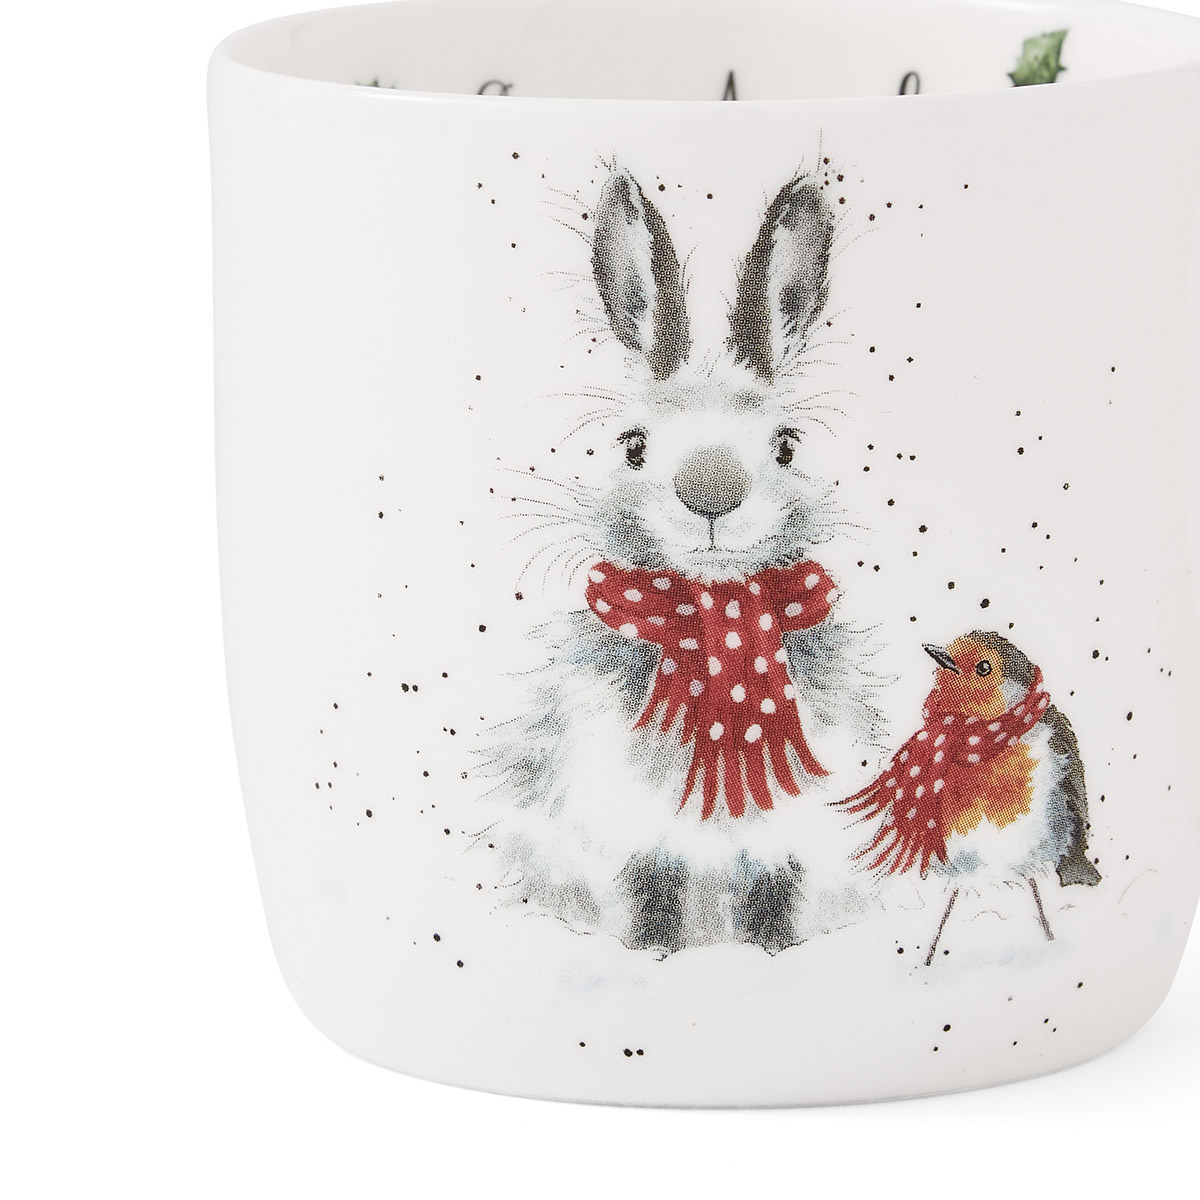 Wrendale Designs Snow Angels Mug (rabbit & robin) image number null